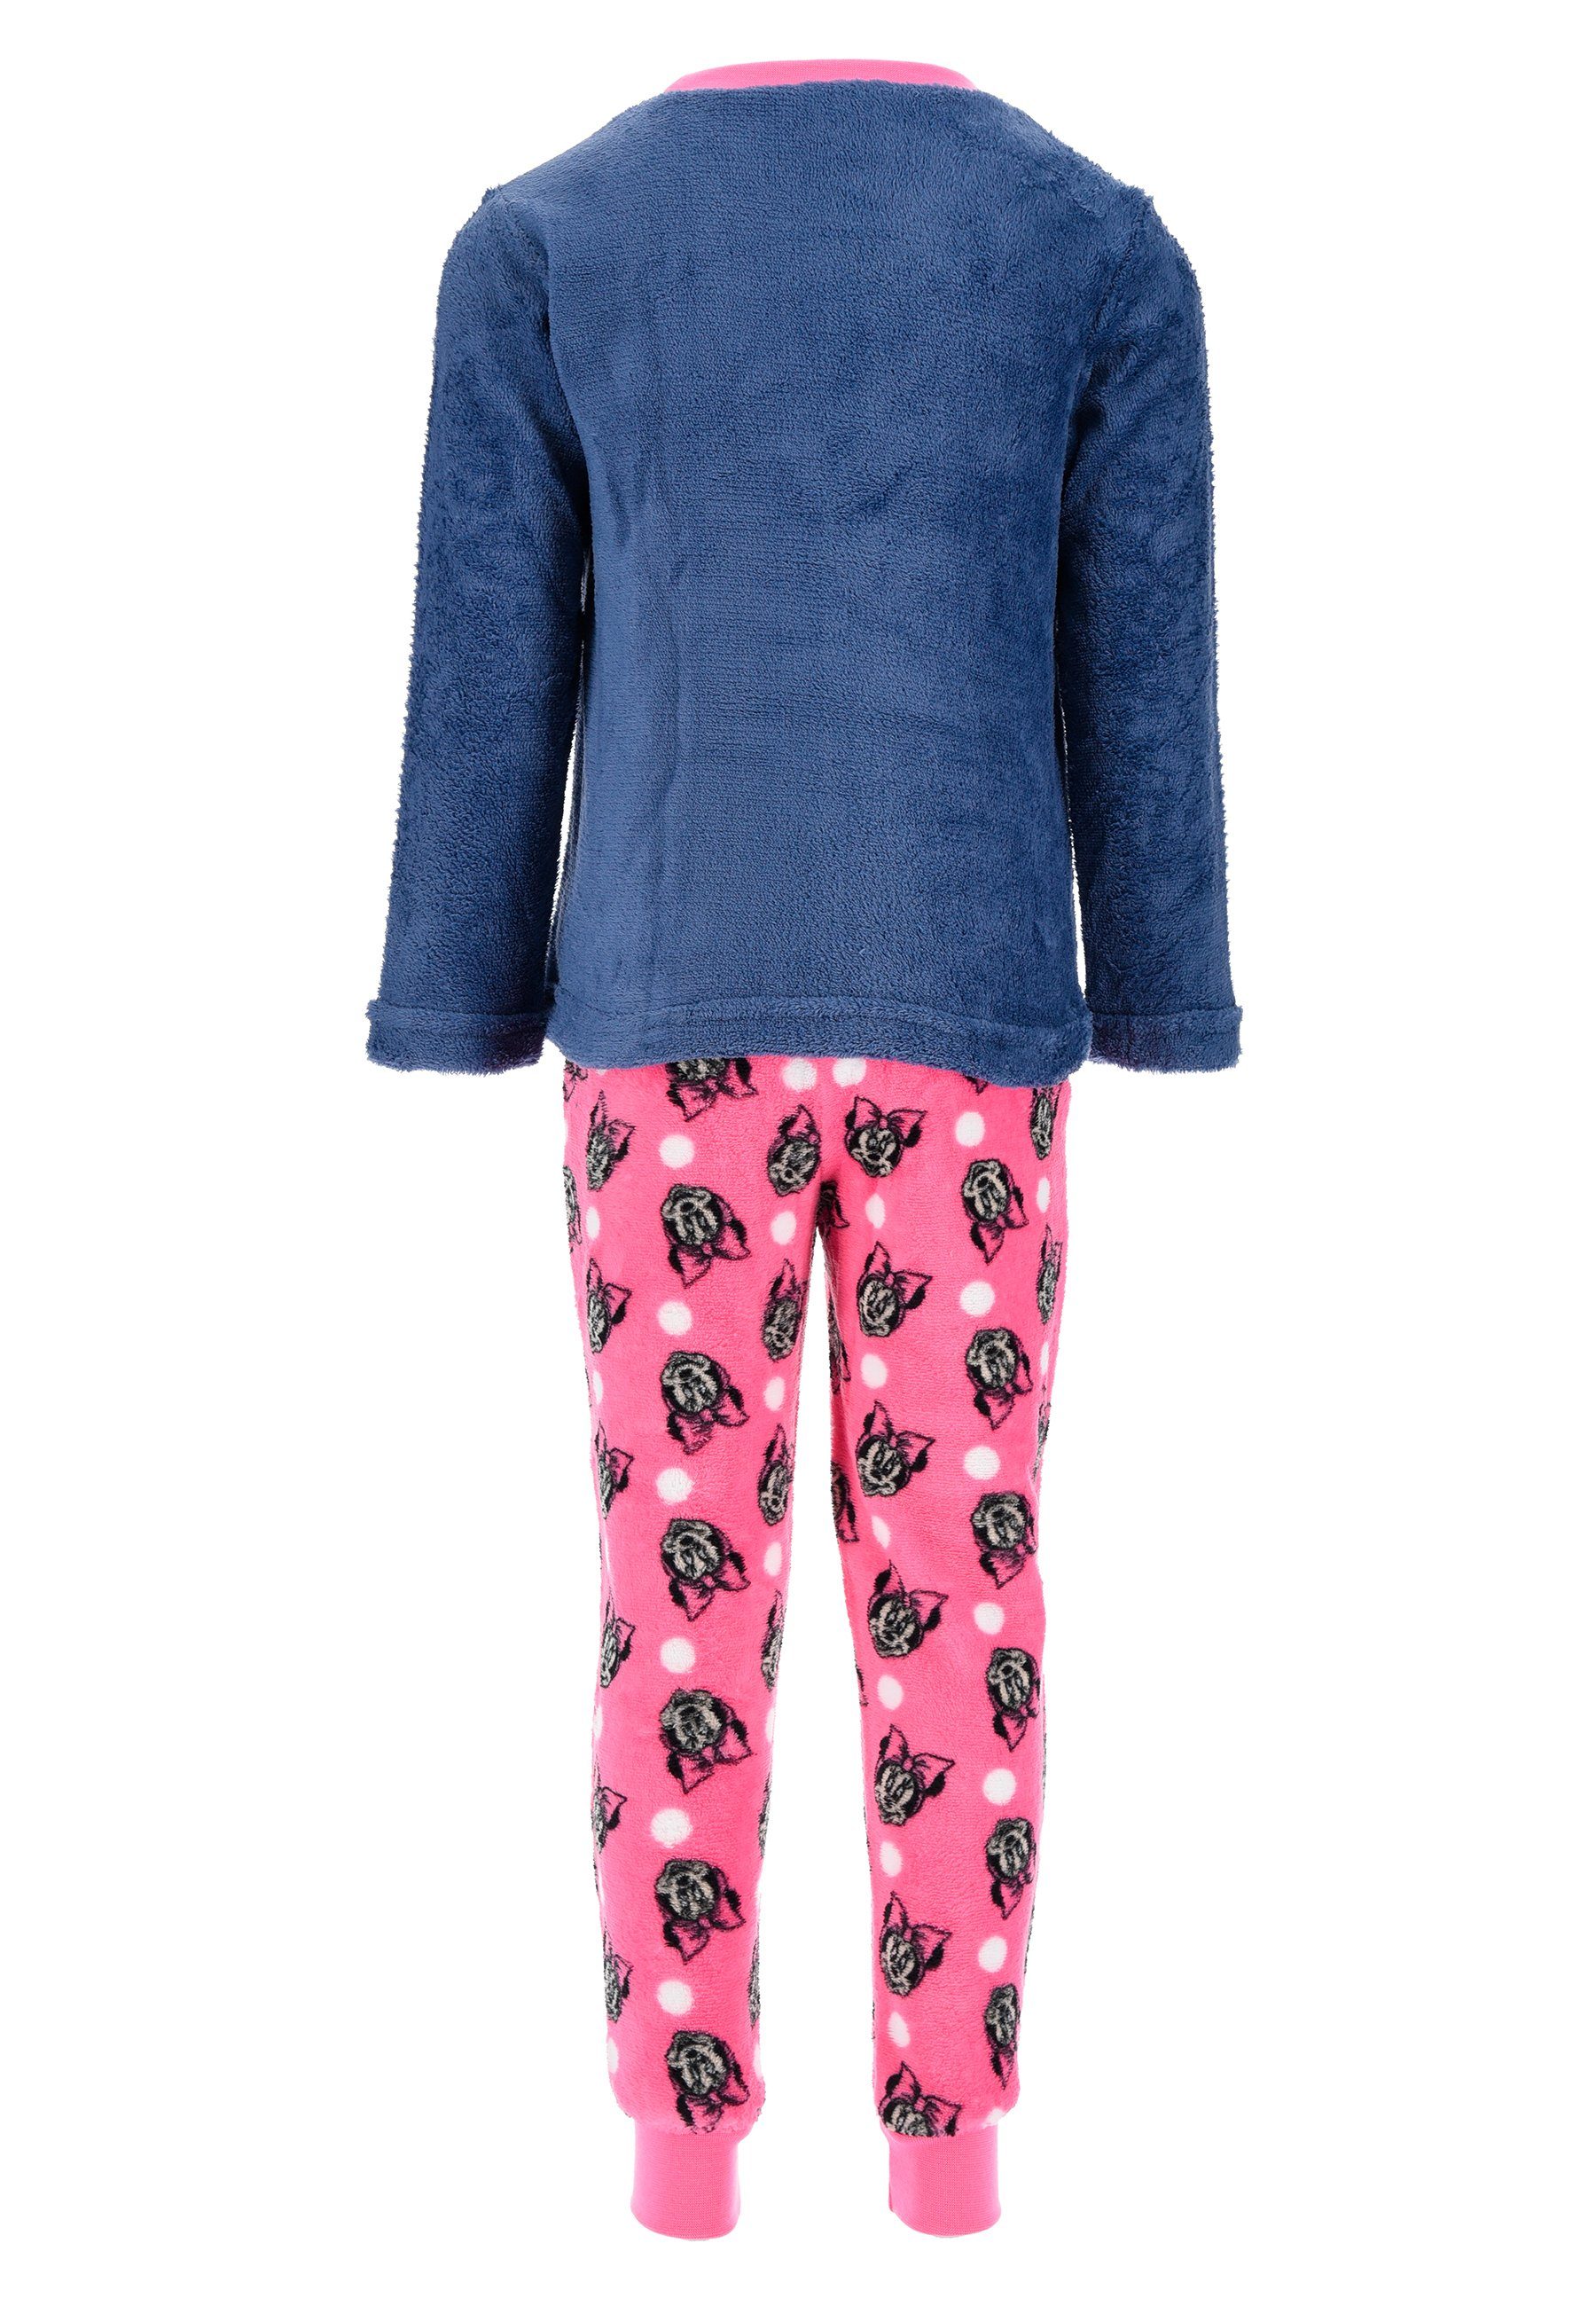 Kinder Pyjama Mouse Shirt tlg) Minnie Disney Maus Schlaf-Hose Mädchen Dunkel-Blau (2 Mini + Langarm Schlafanzug Schlafanzug